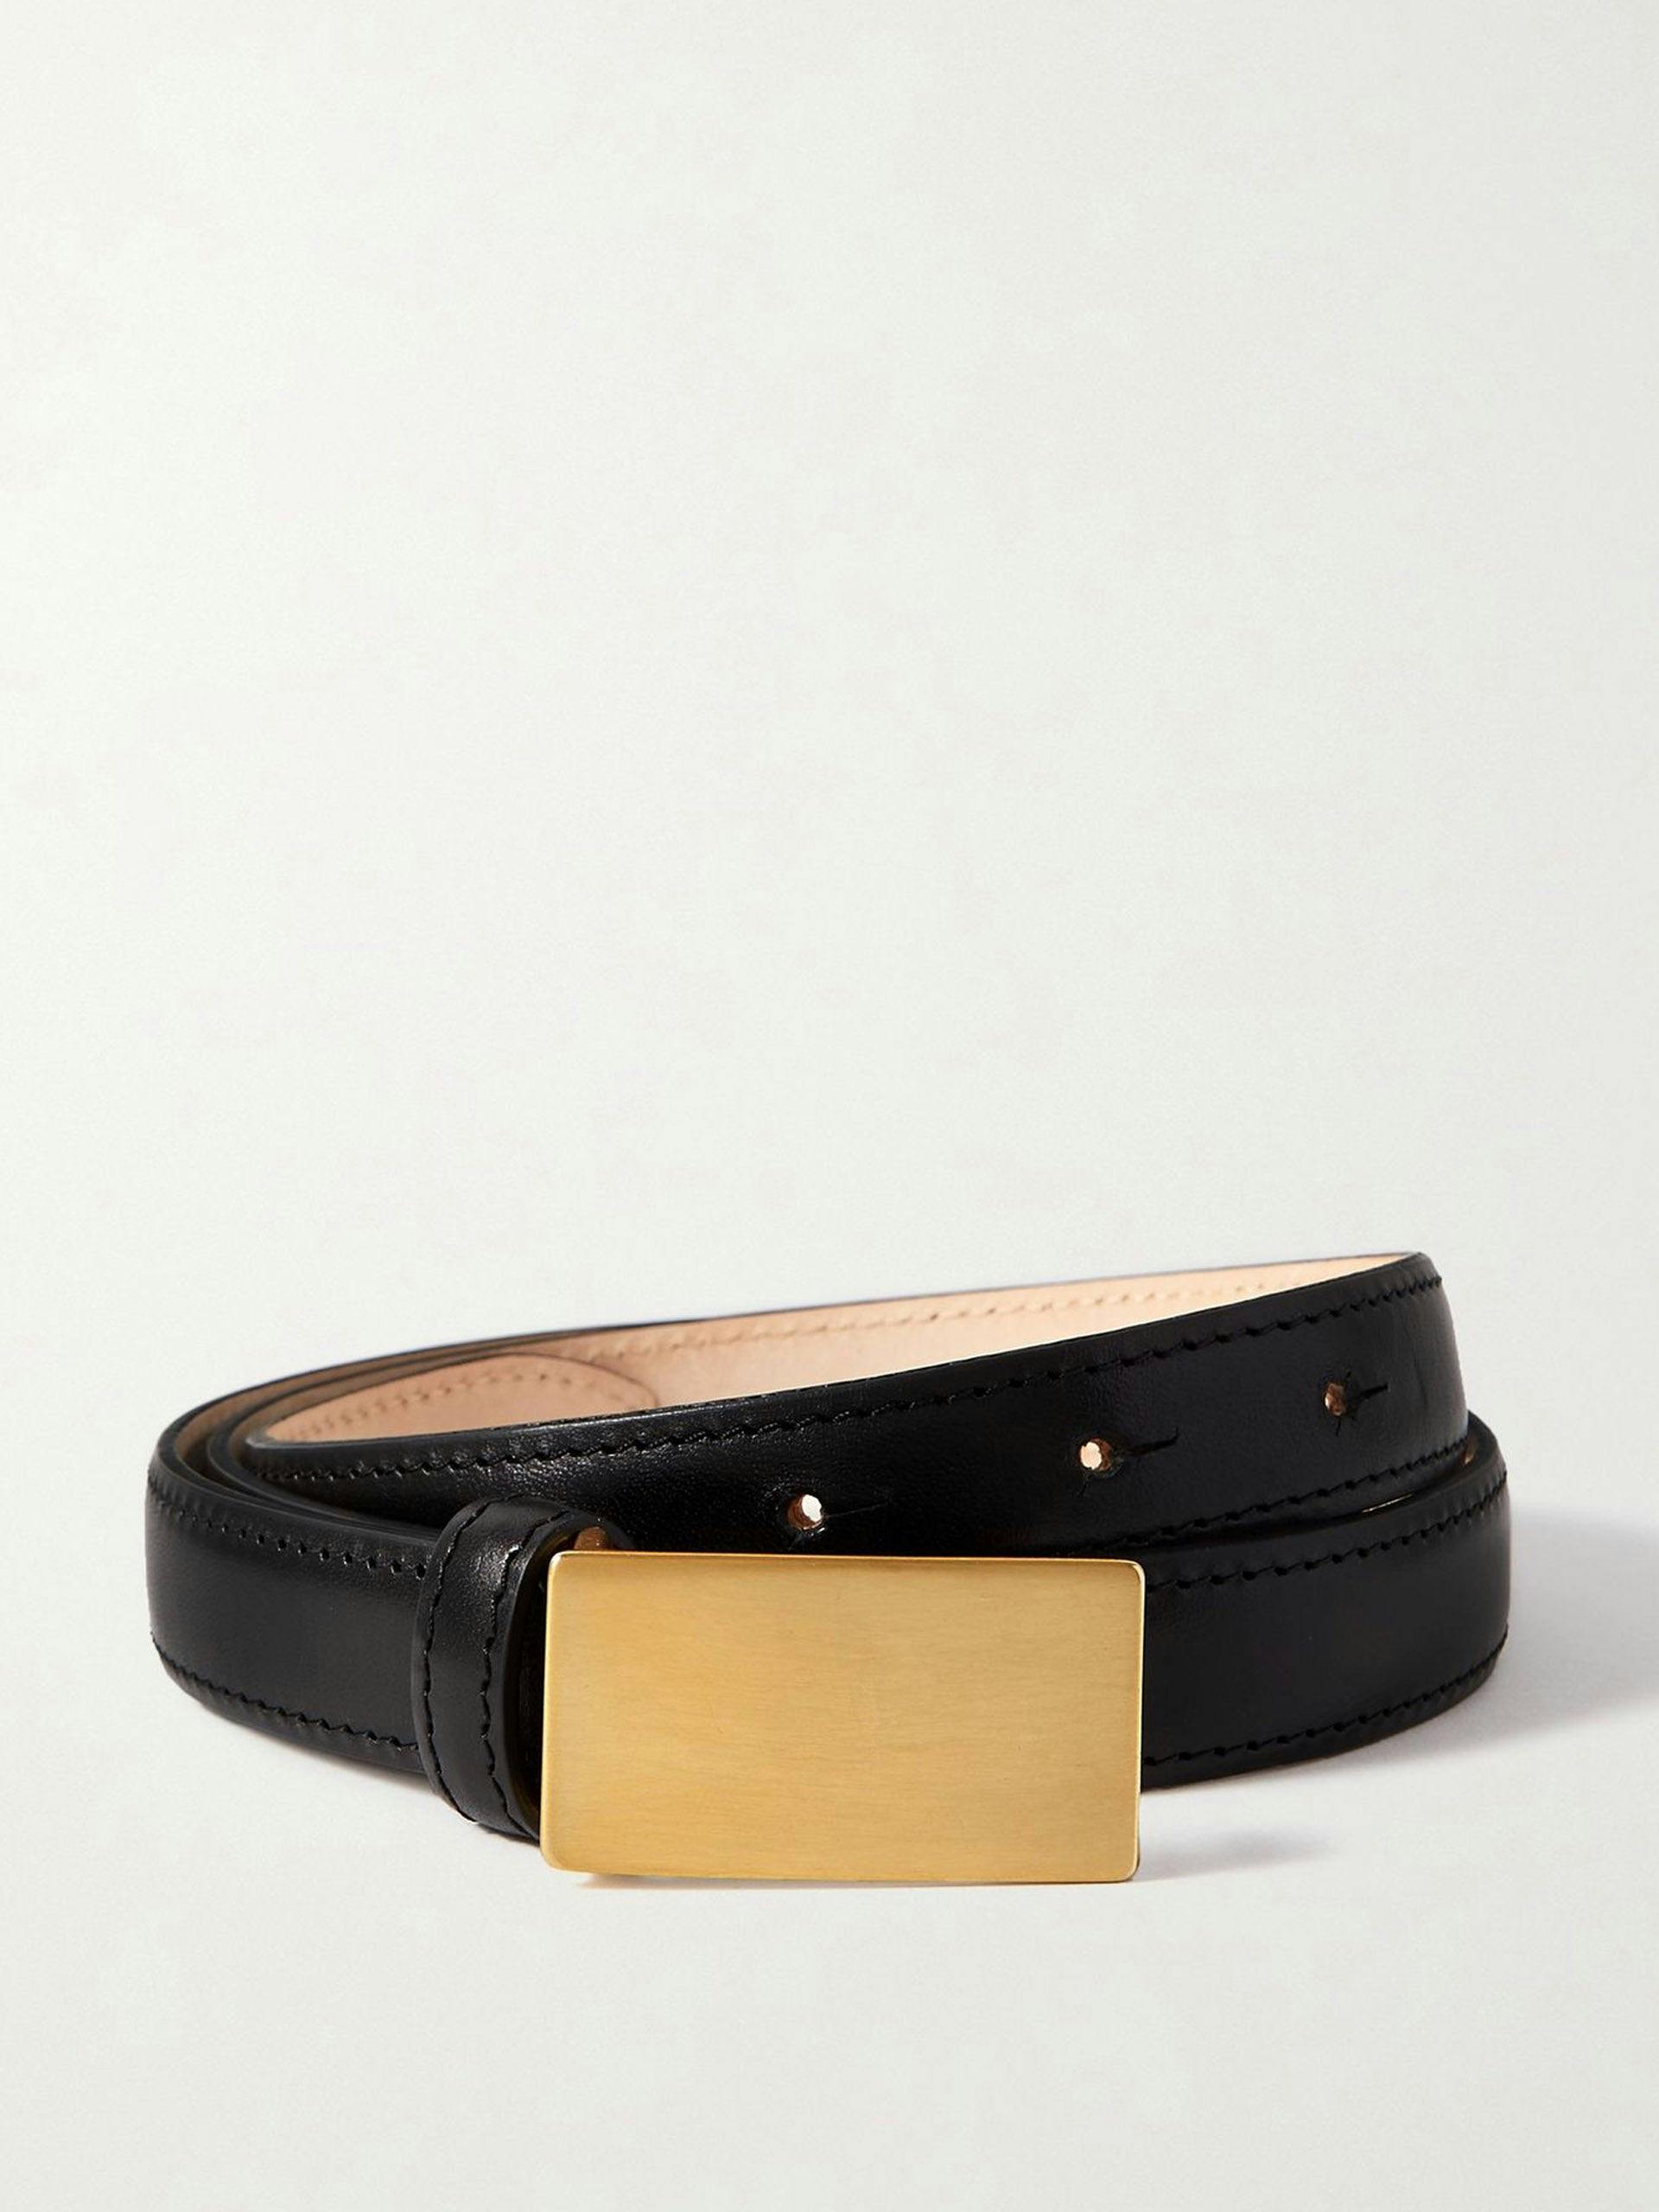 Signet leather belt